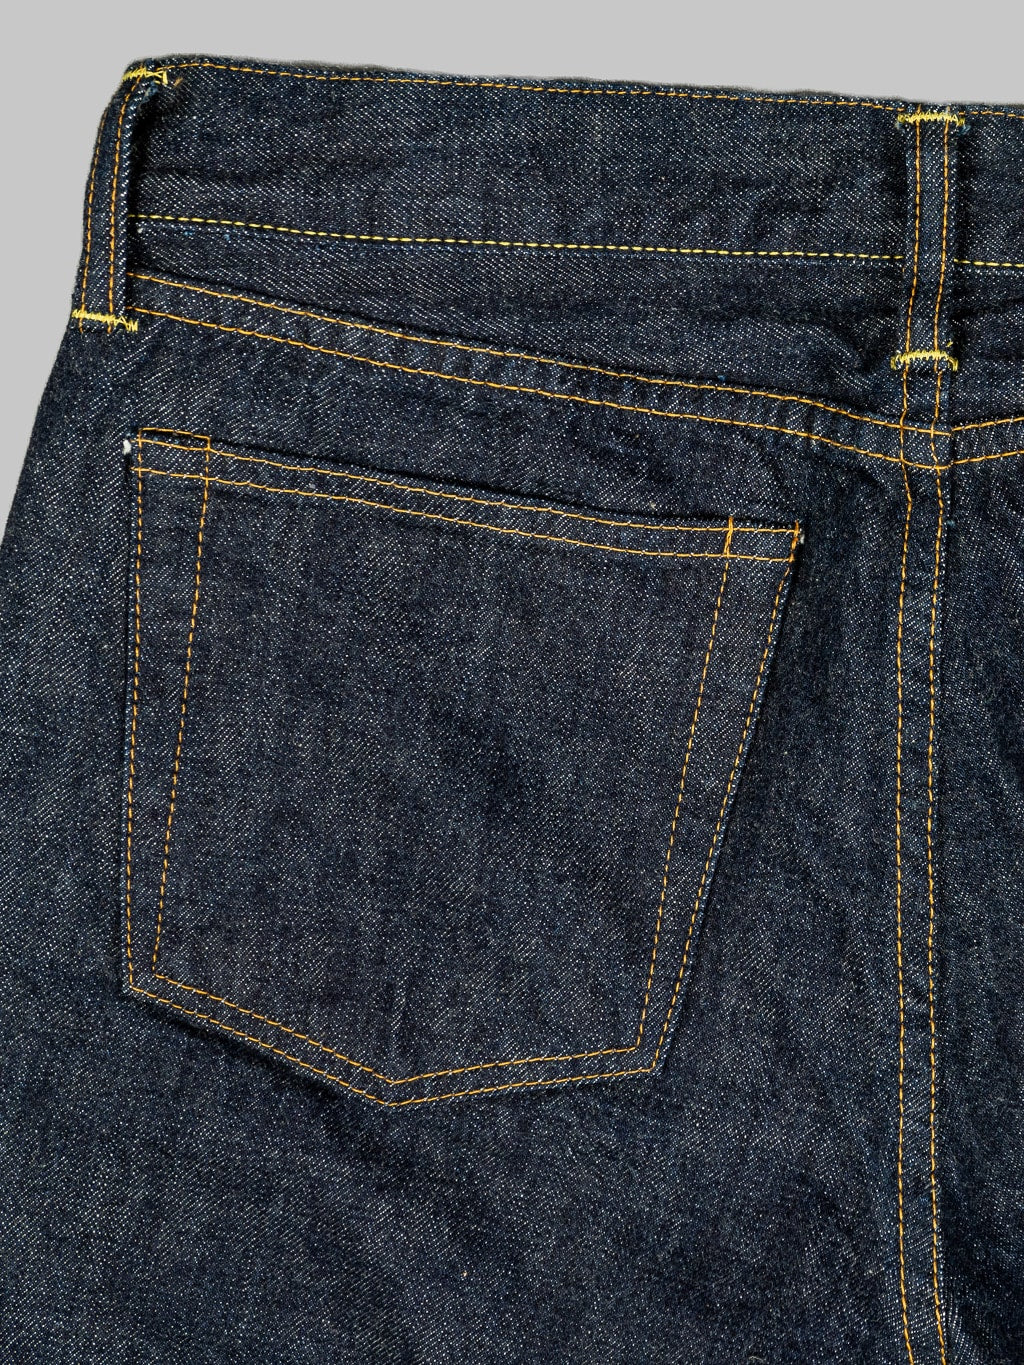 tcb 50s slim jeans t one wash back details